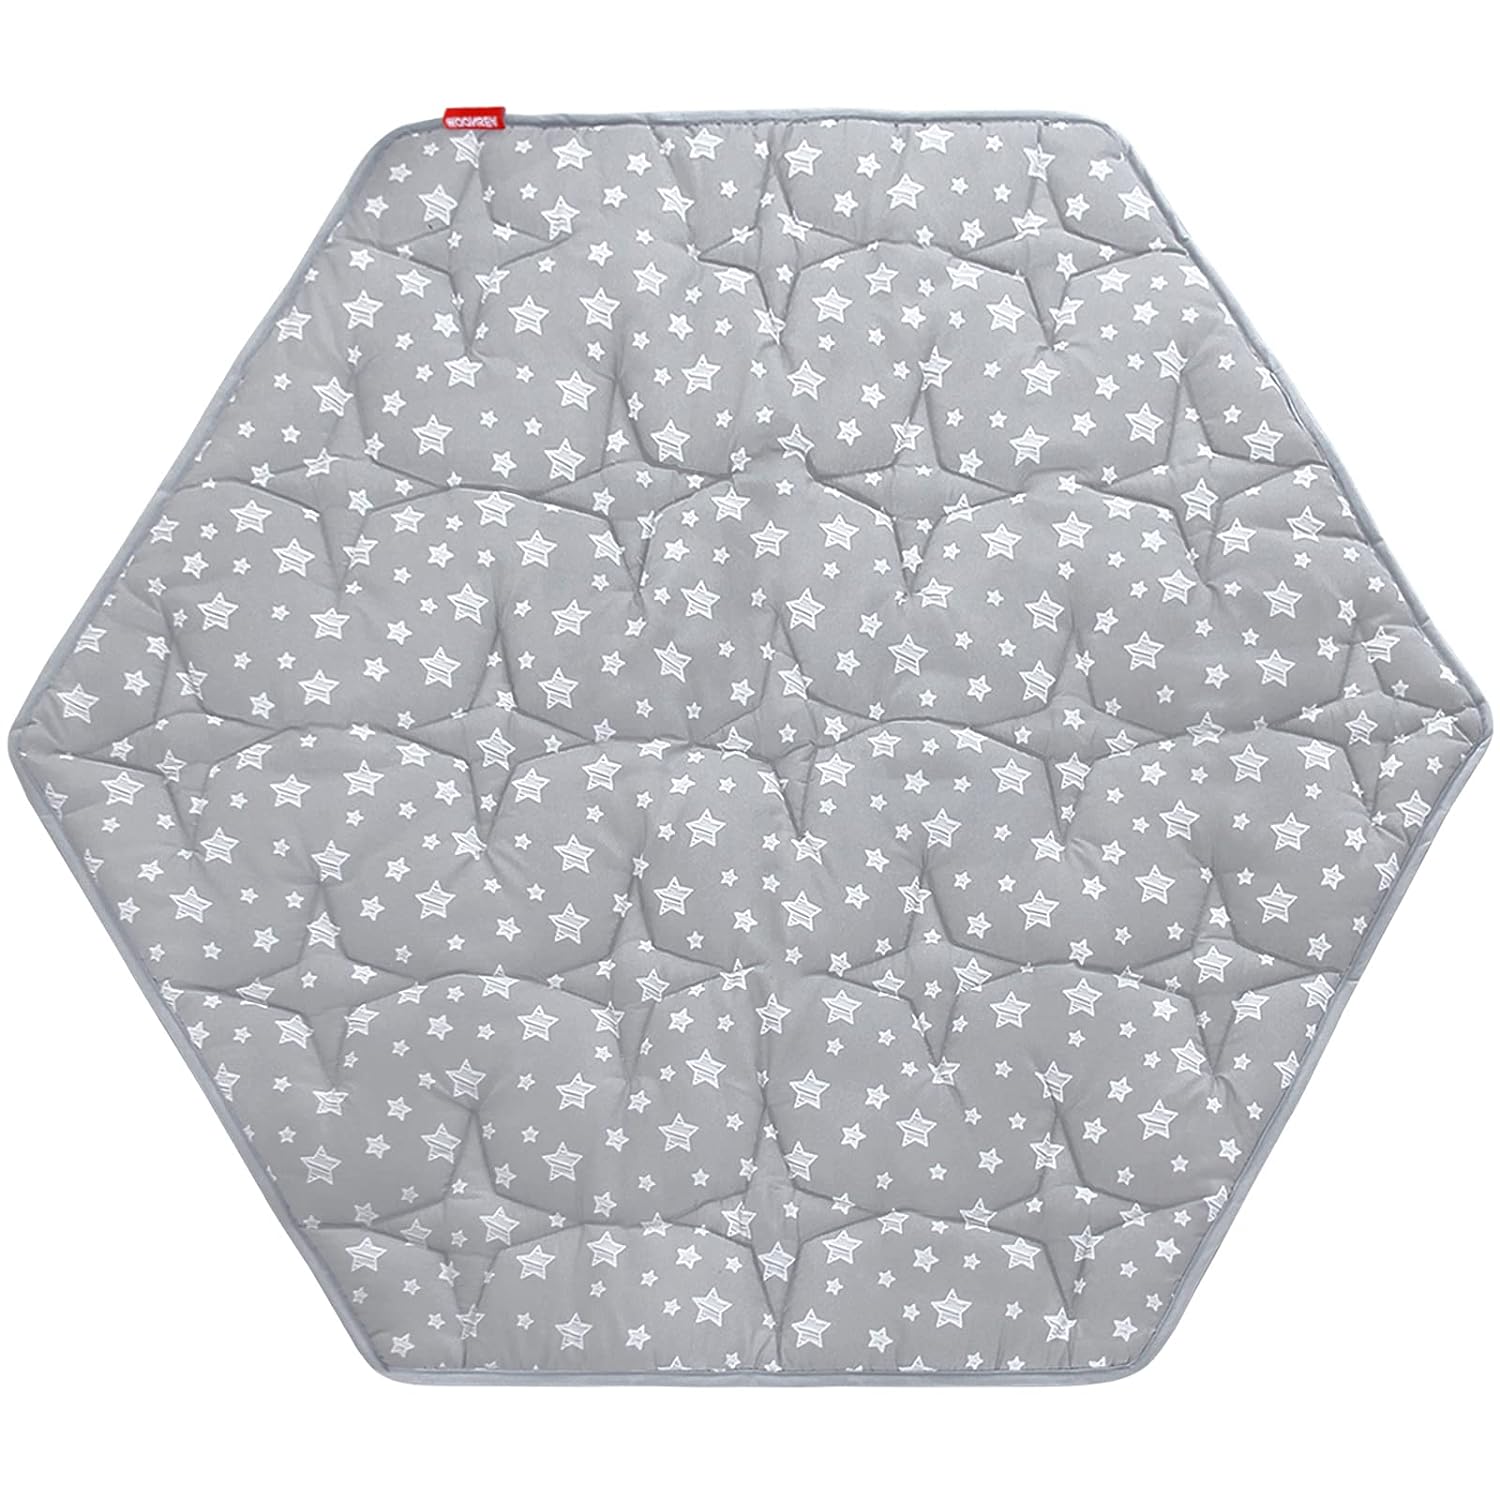 Baby Play Mat | Hexagon Playpen Mat - Padded and Non-Slip Activity Mat for  Infant & Toddler